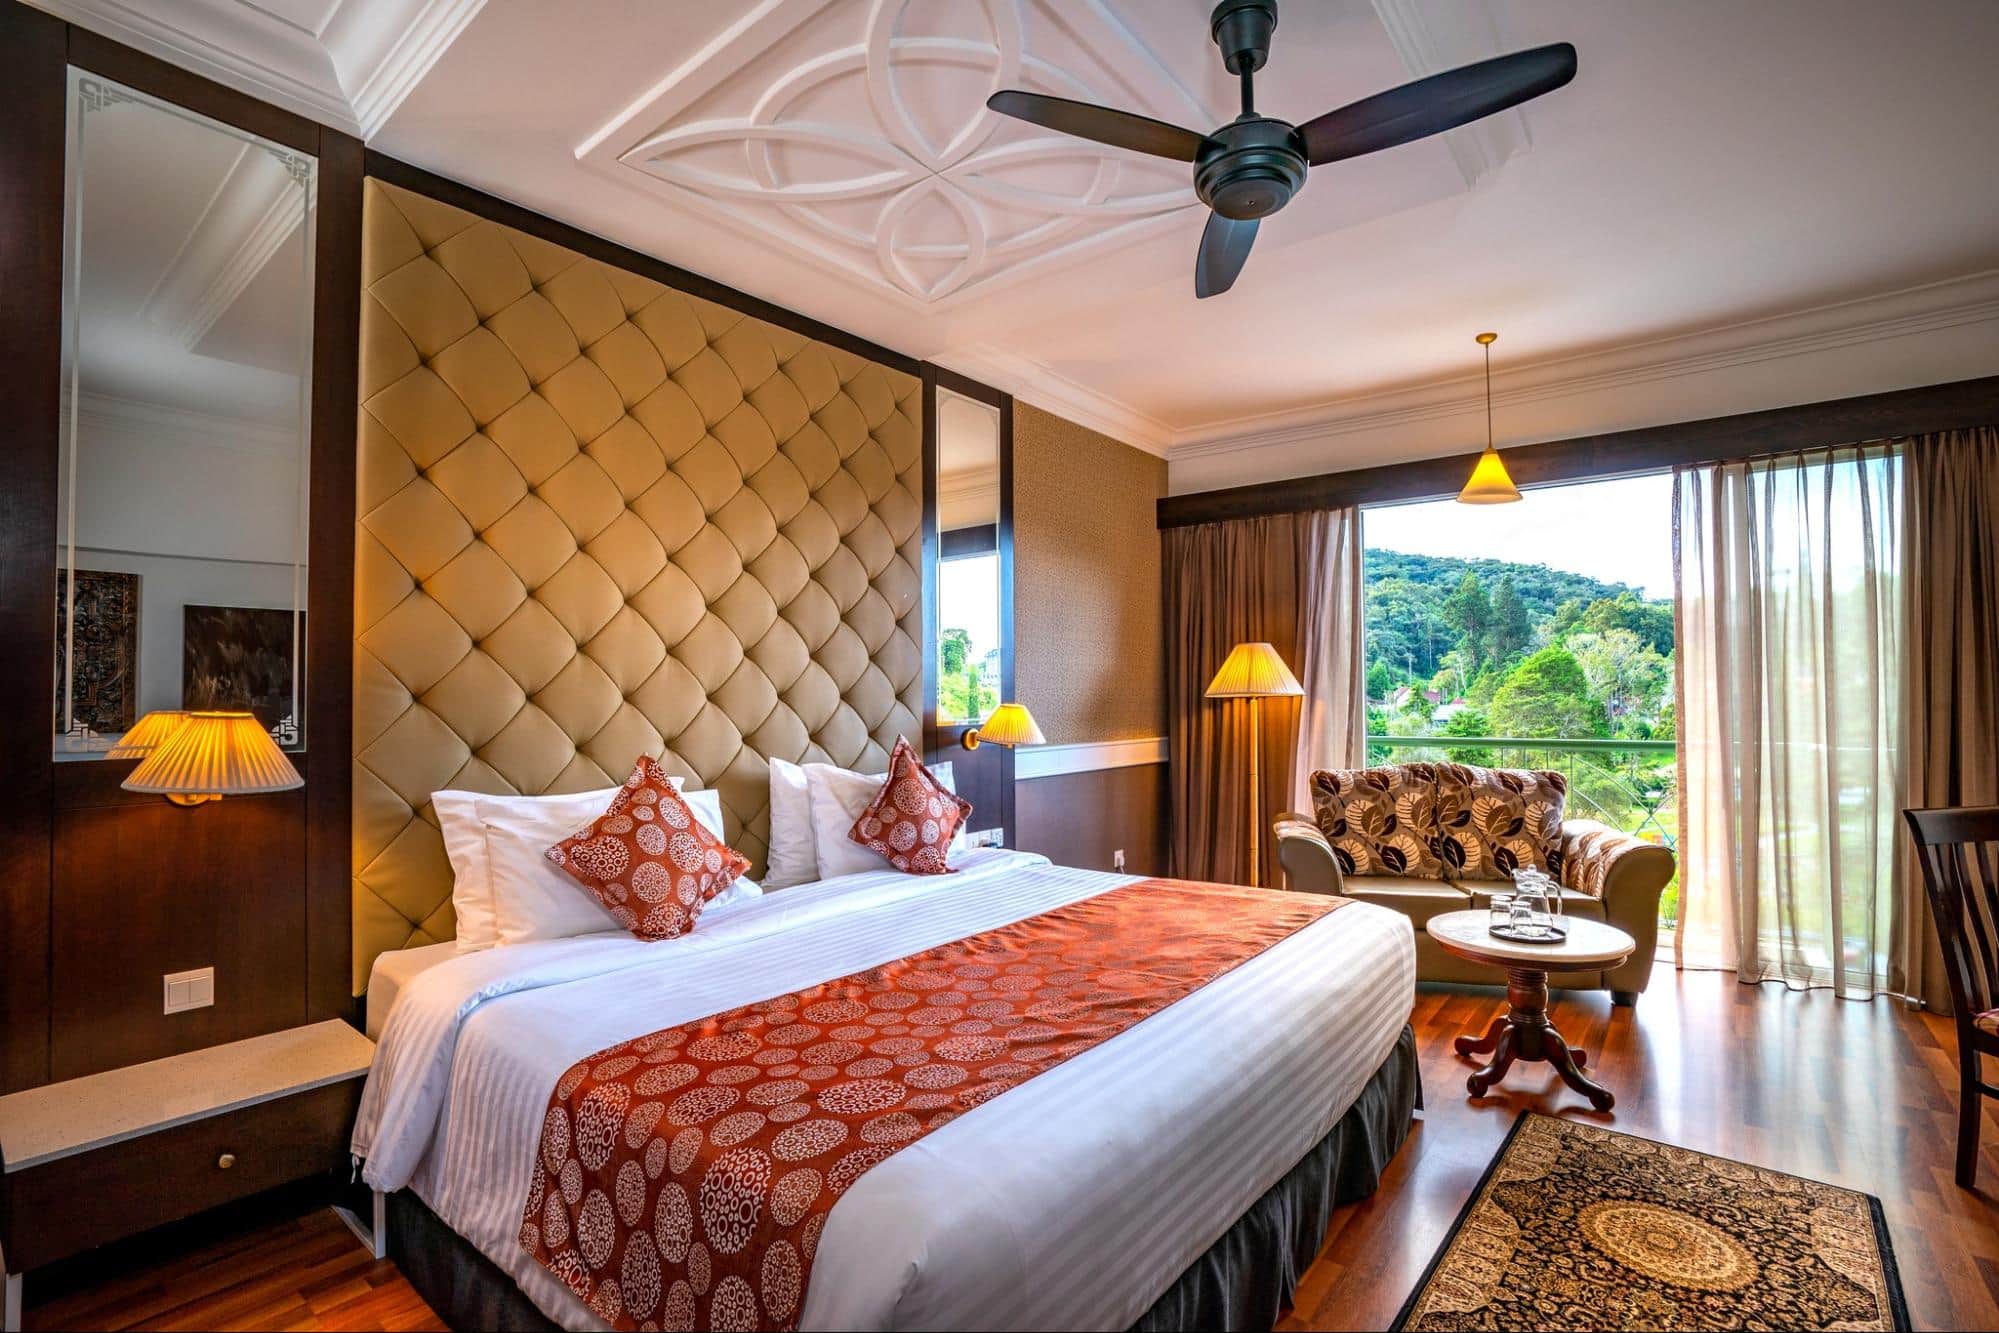 Century Pines Resort - rooms